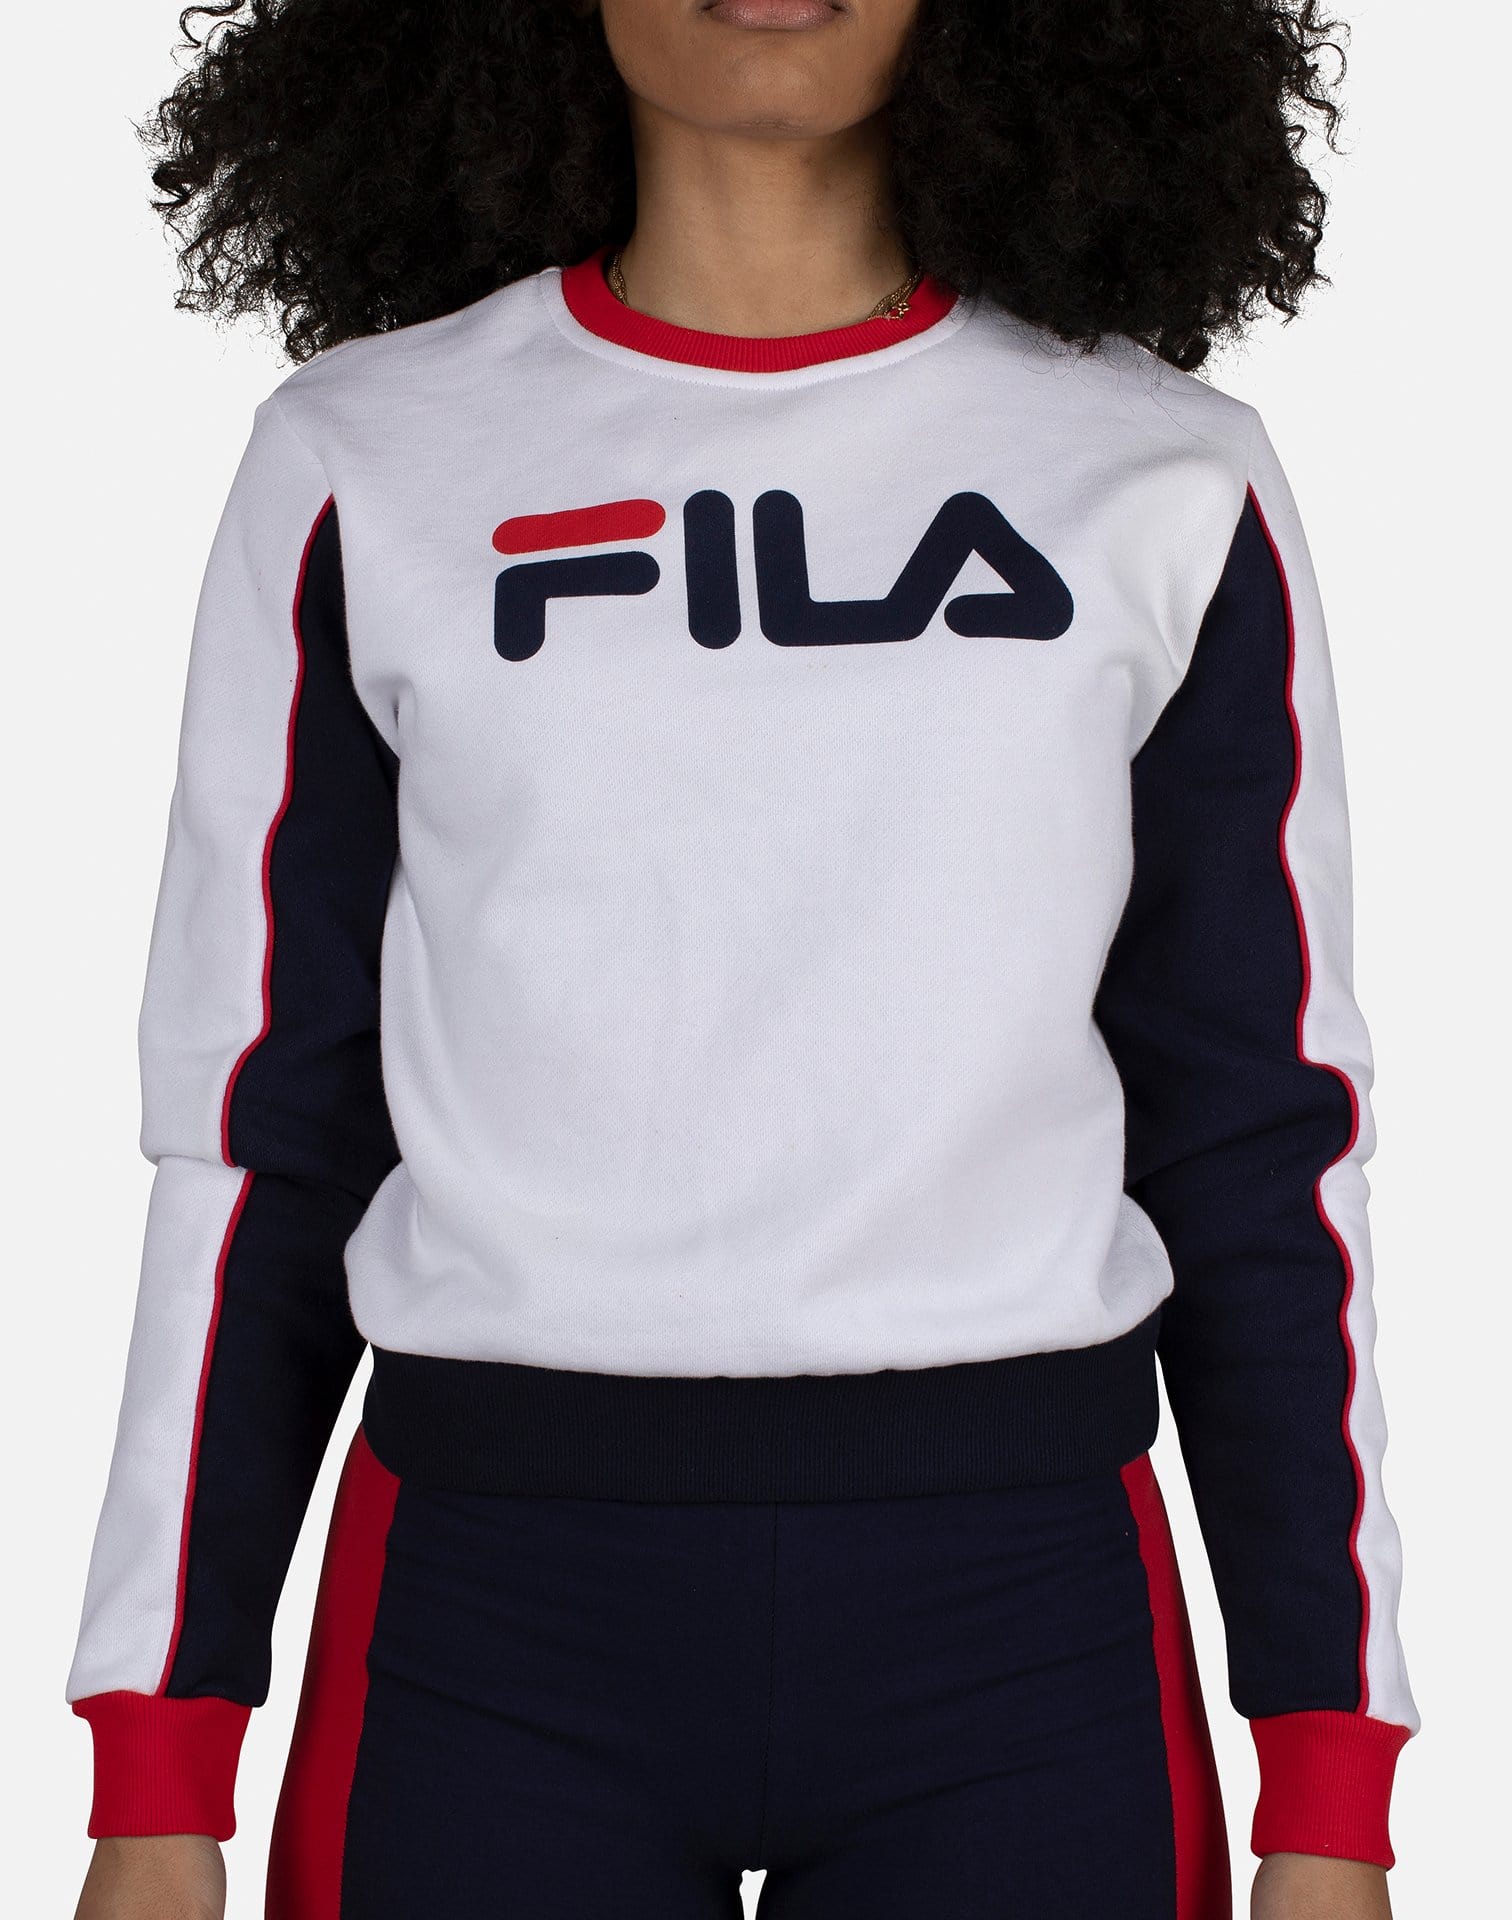 FILA Women's Nuria Colorblock Sweatshirt